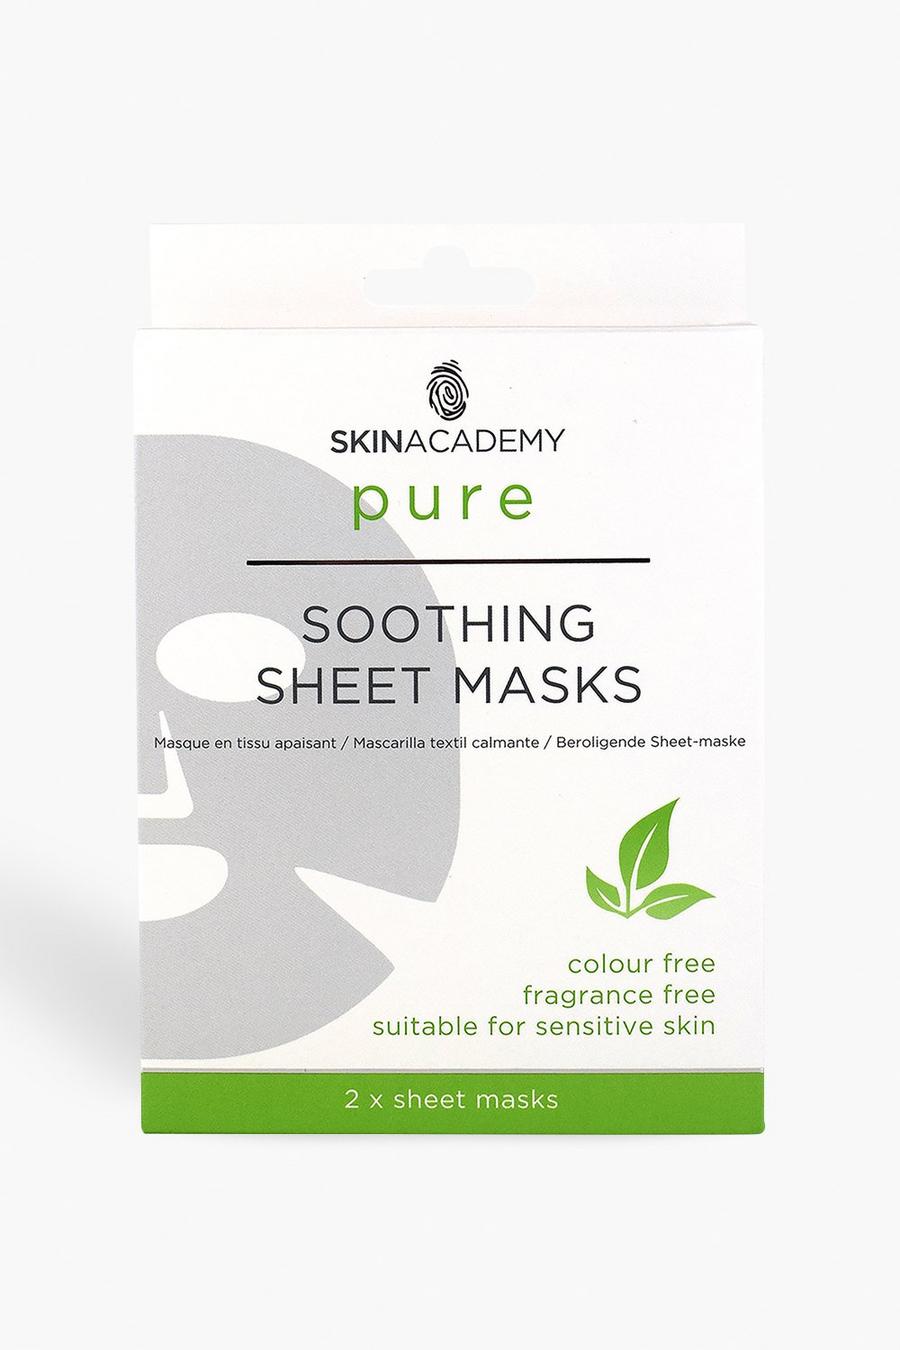 Masque en tissu apaisant Pure Skin Academy image number 1